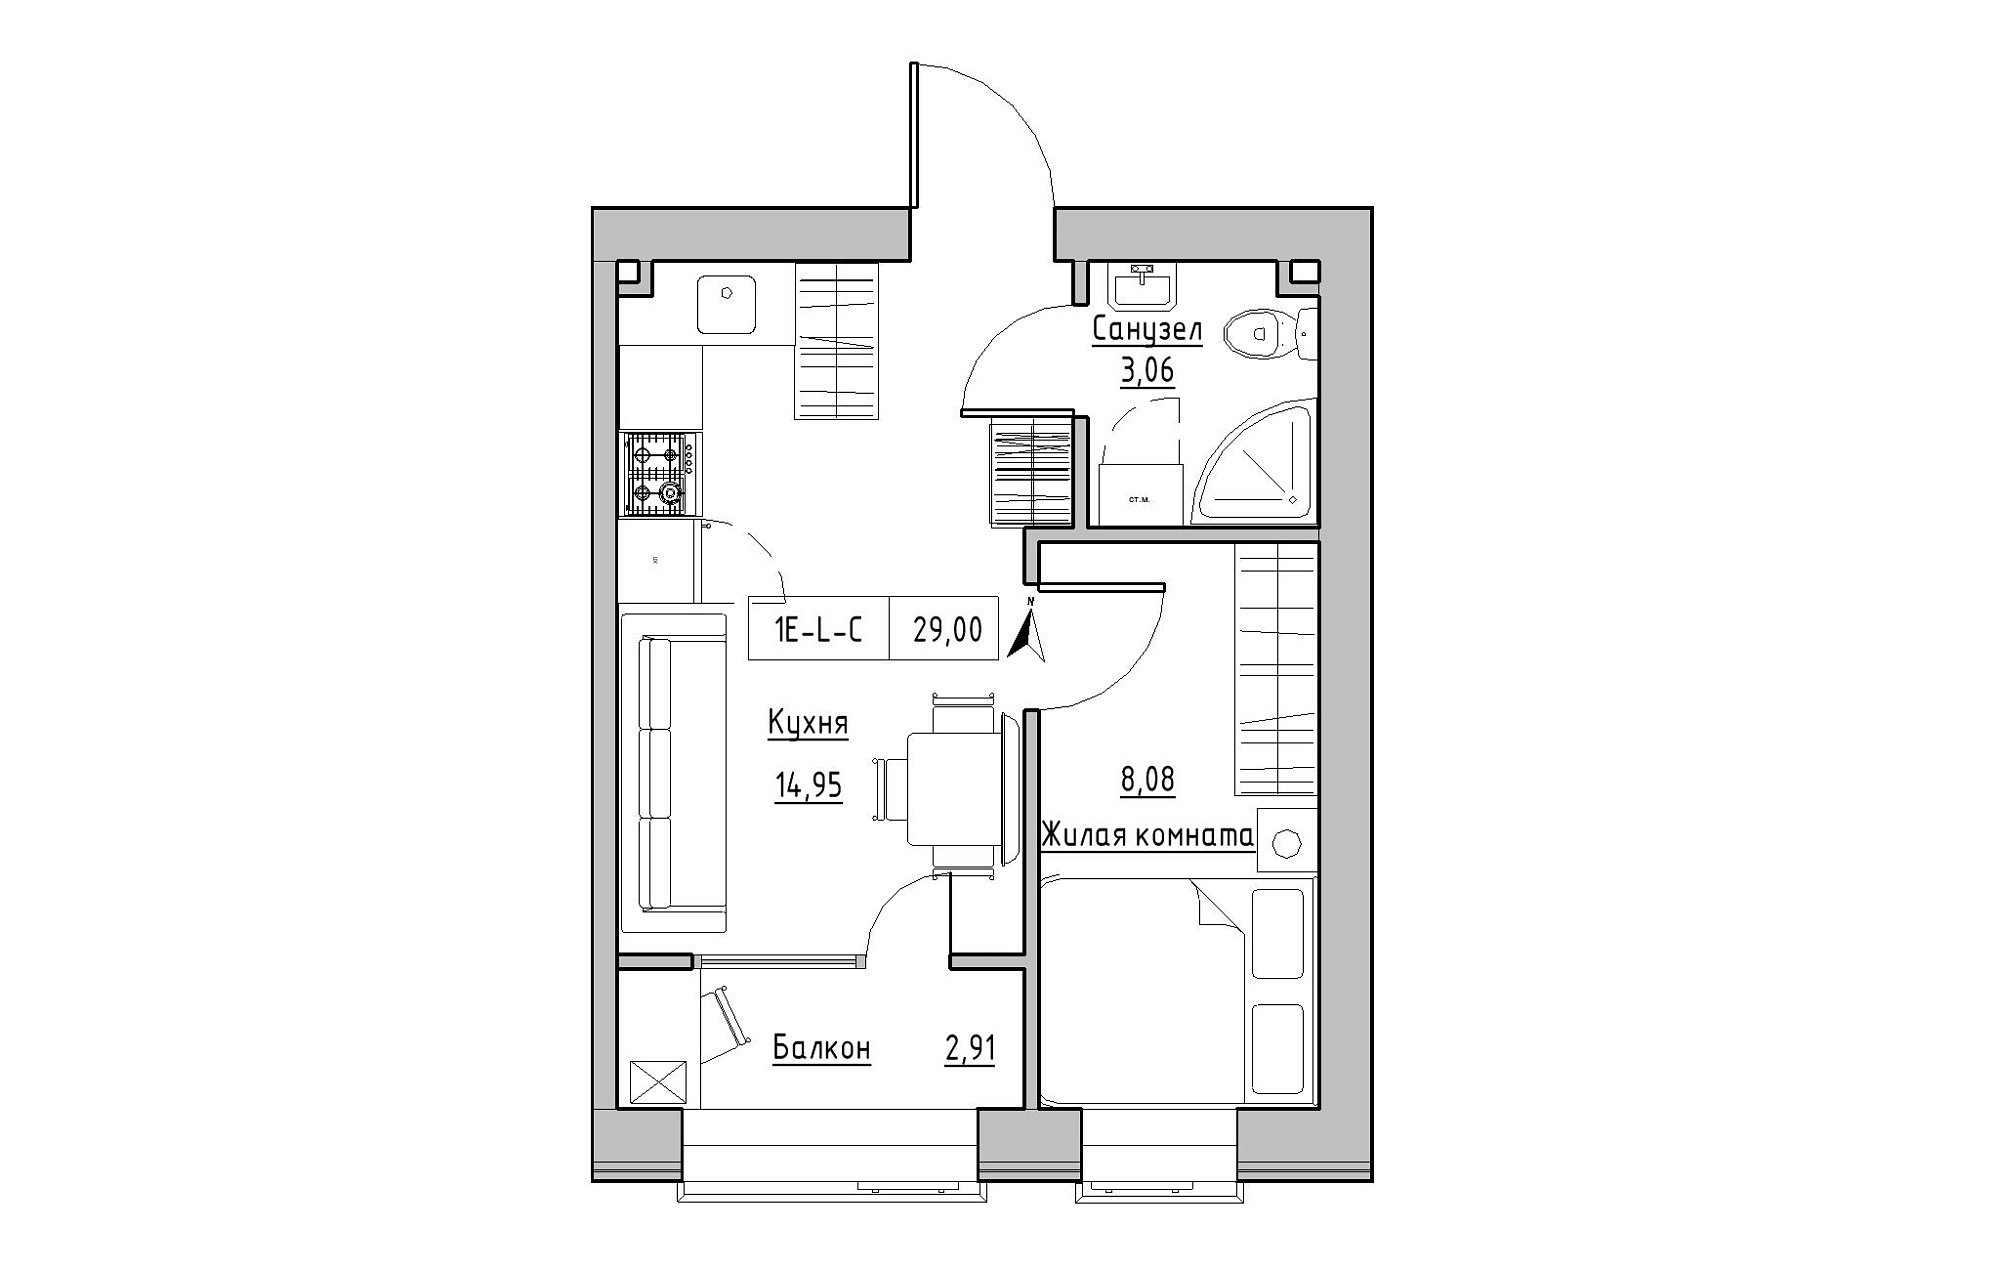 Planning 1-rm flats area 29m2, KS-019-01/0009.